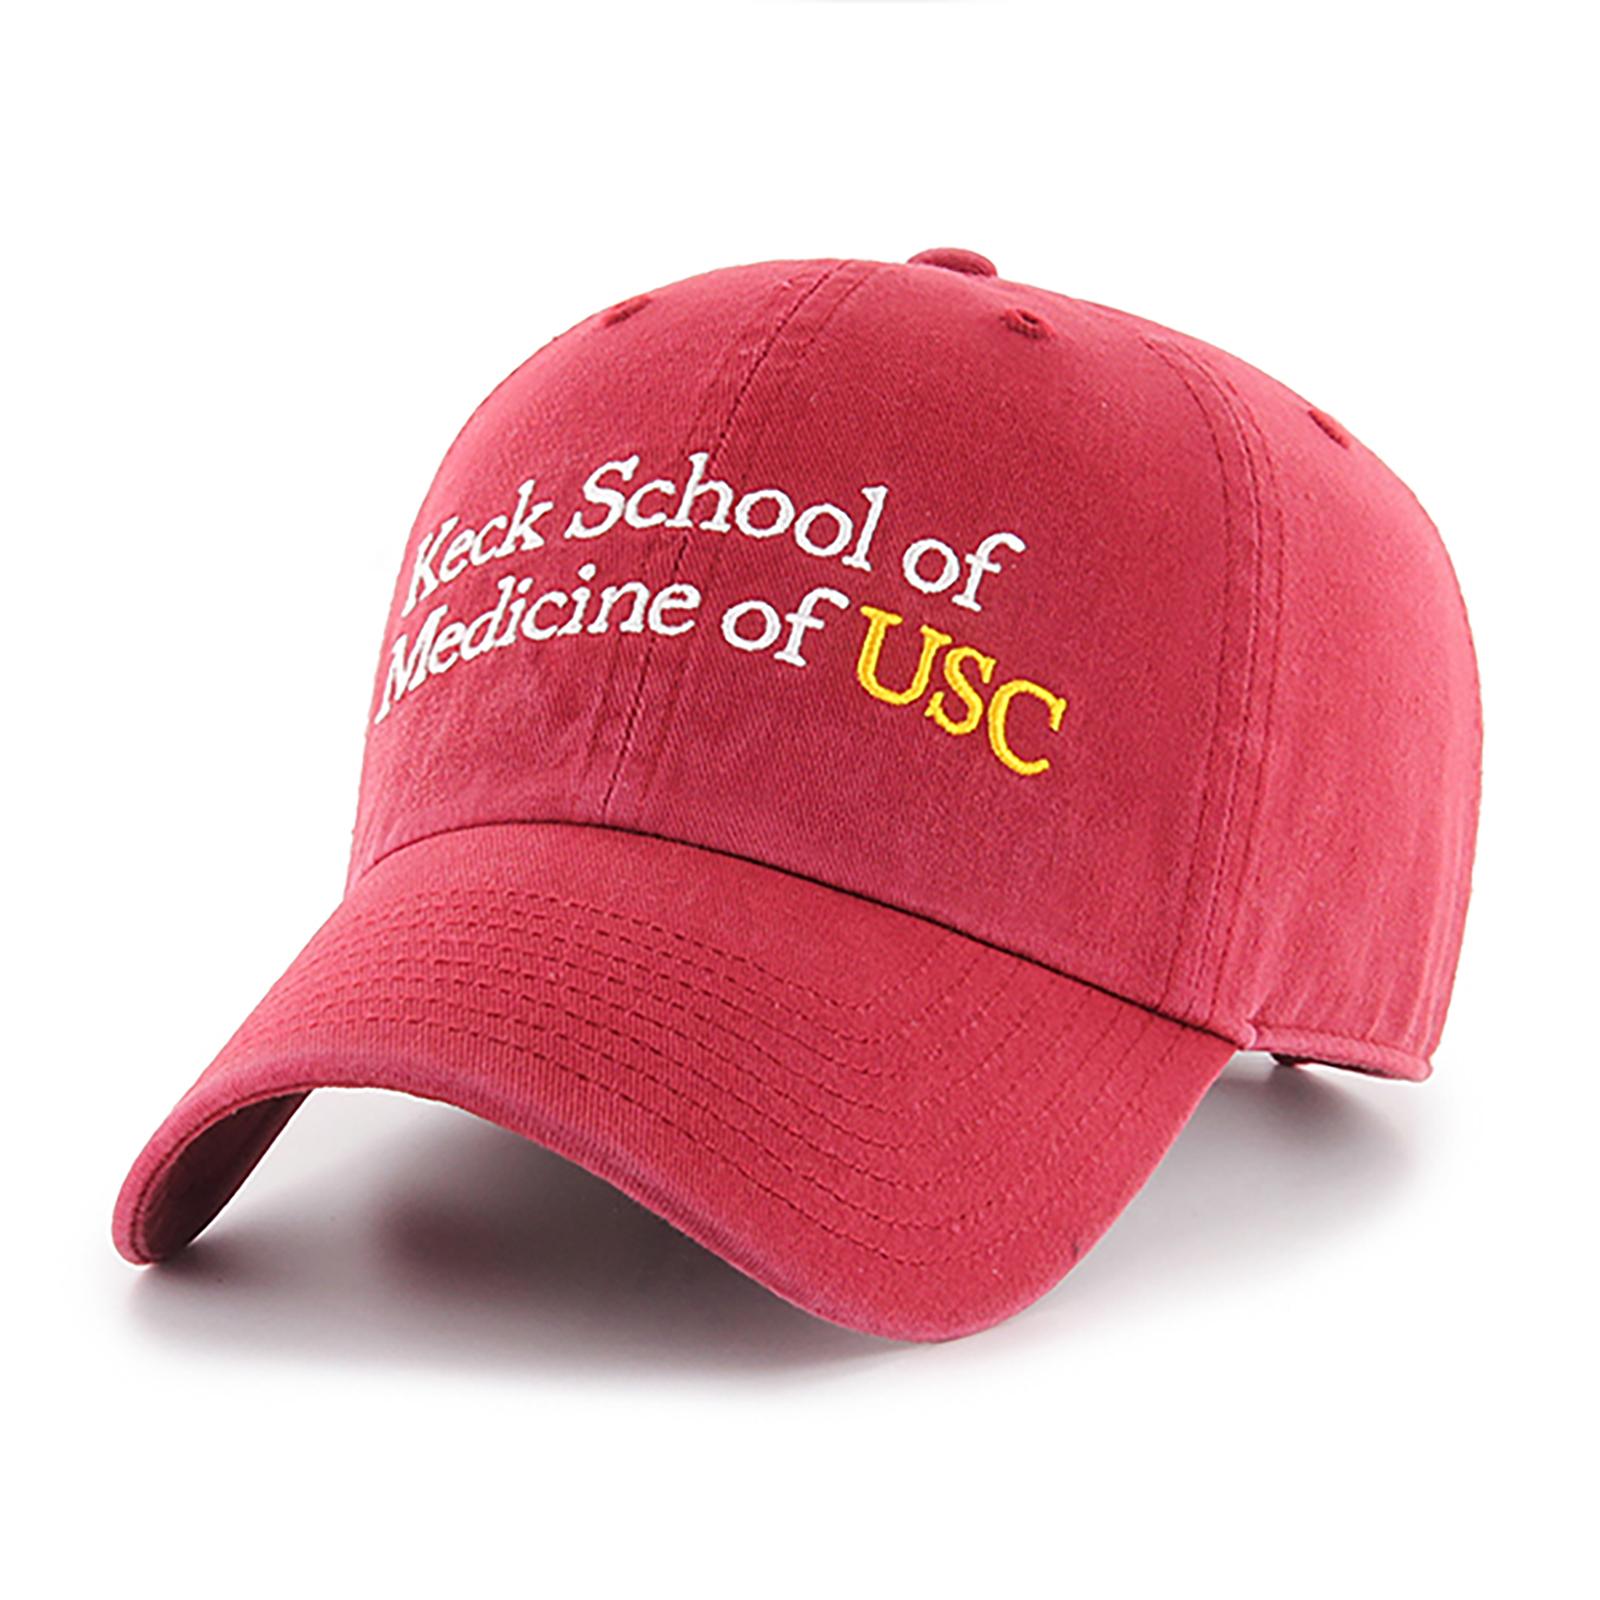 USC Keck School of Medicine School of Cap Cardinal Fits All image01